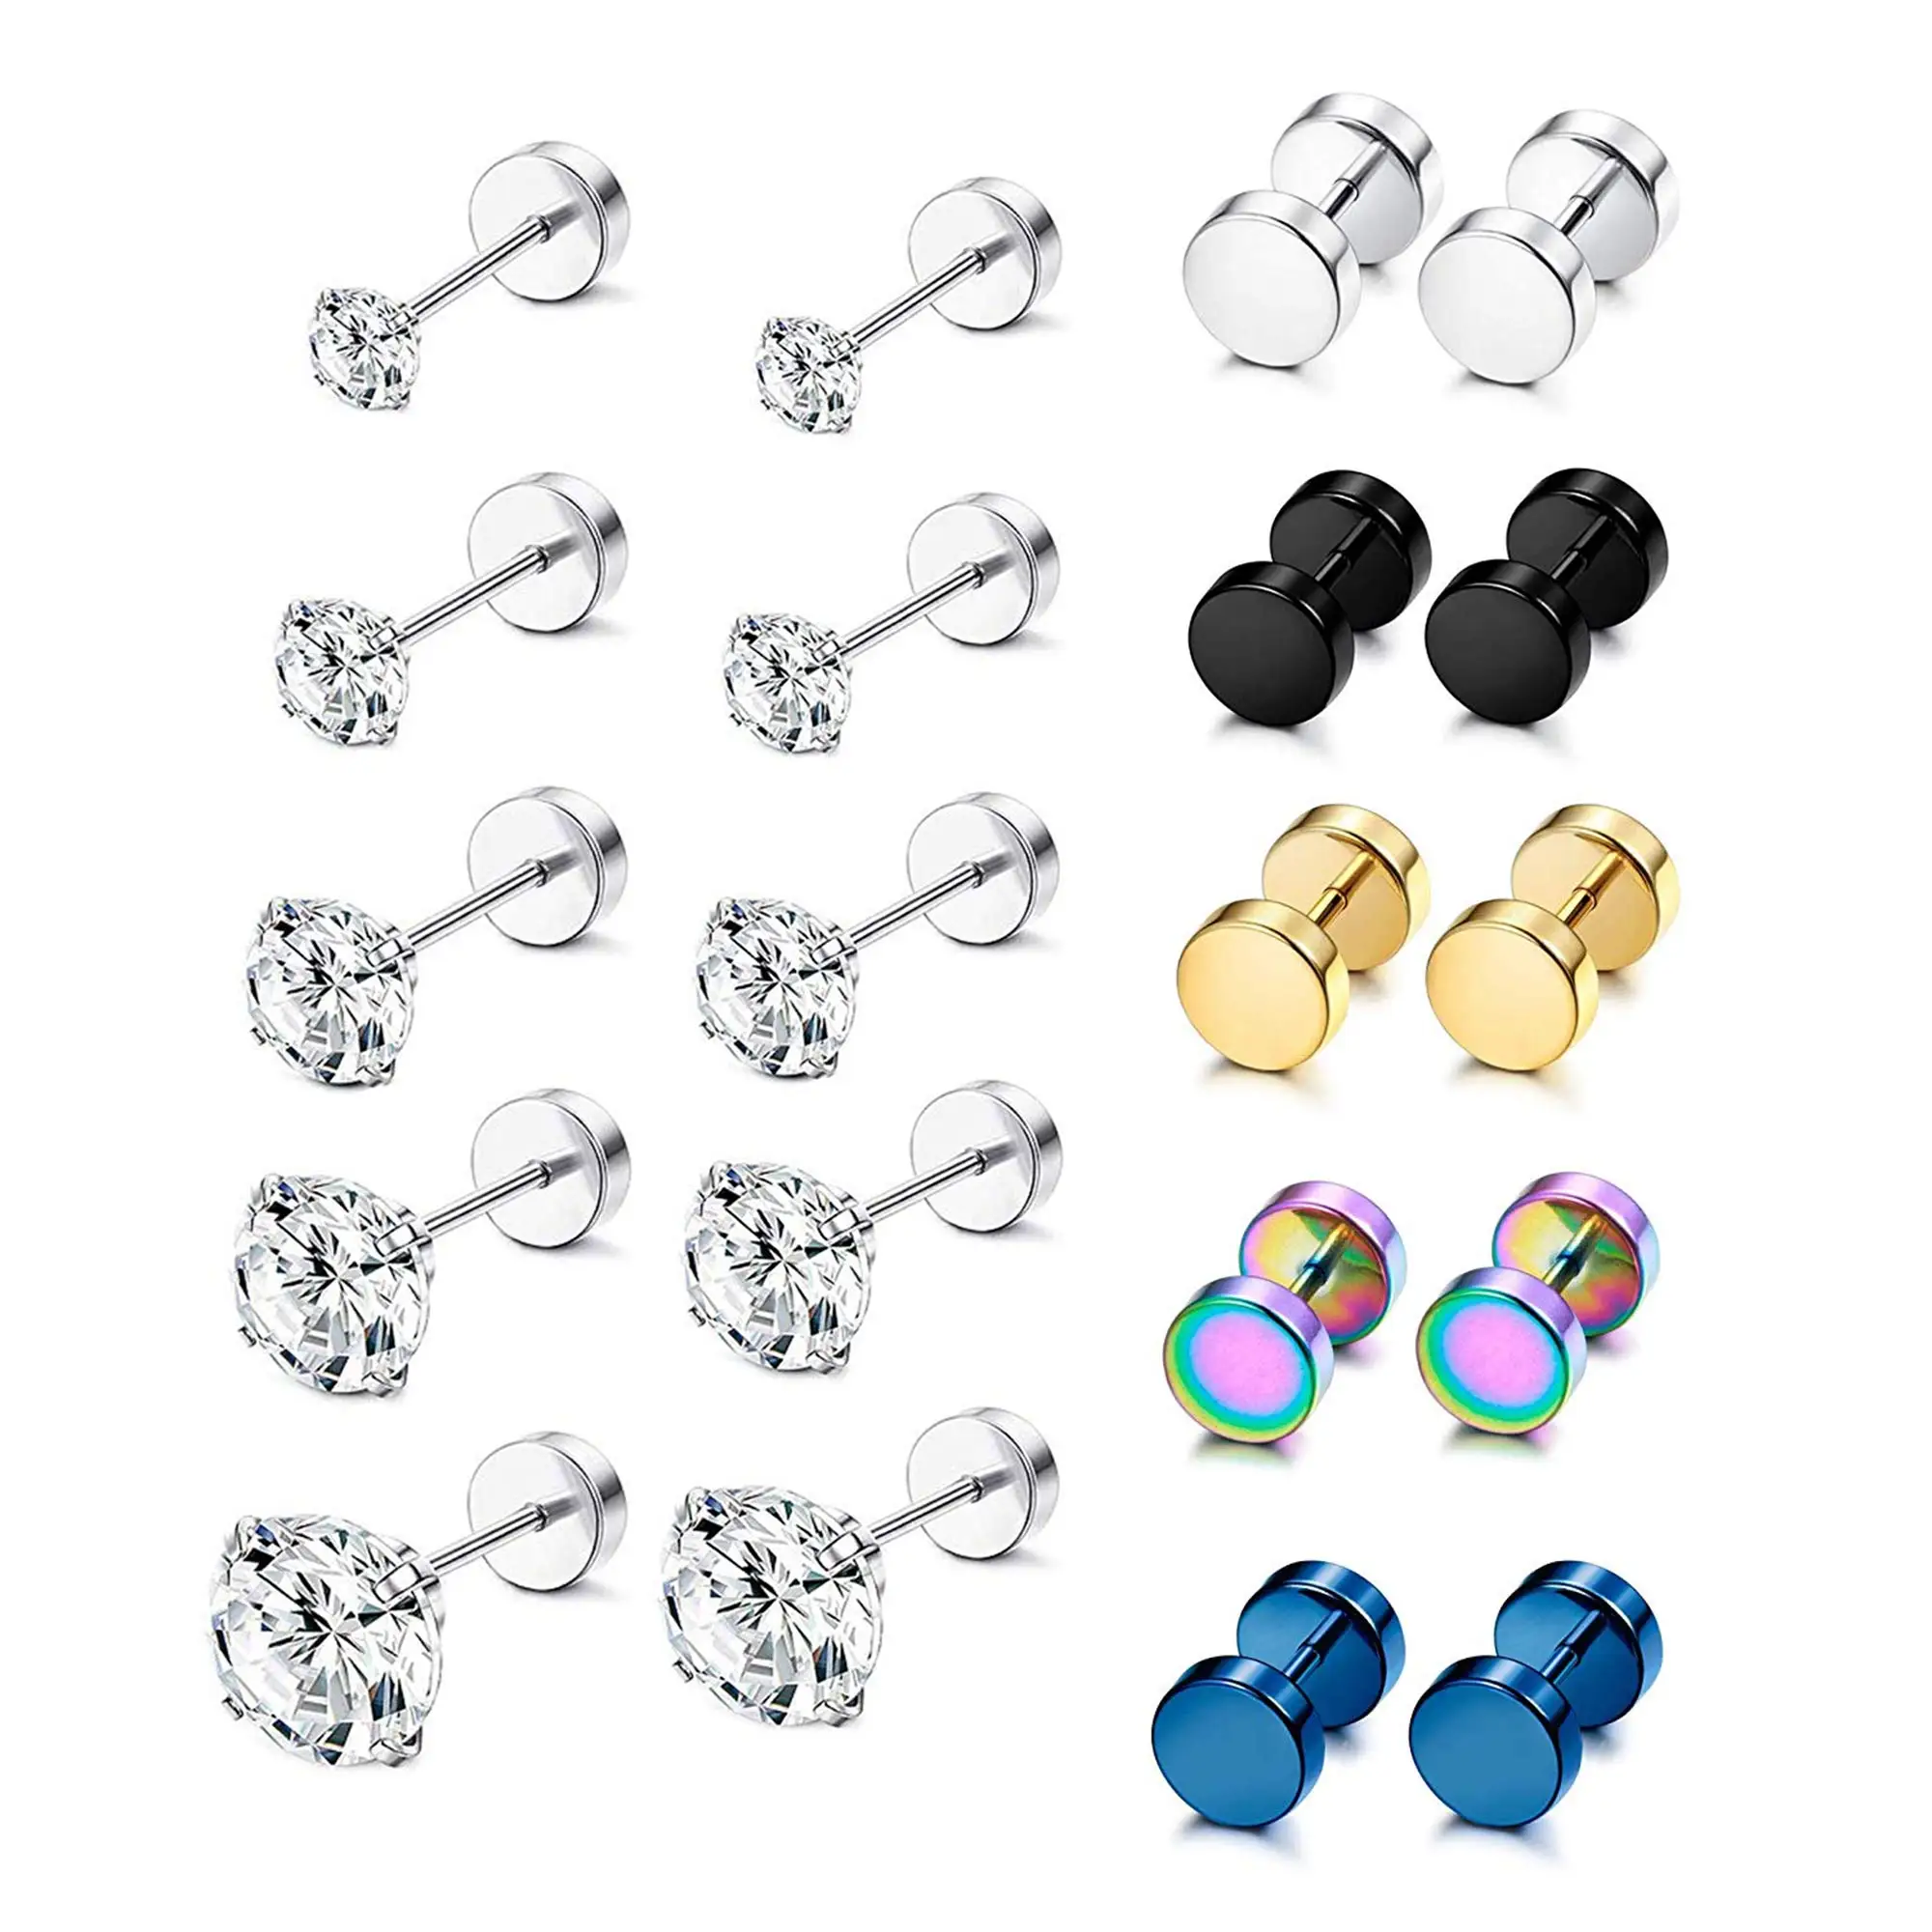 10 Pairs Screw Stud Earrings Flat Back Black Earrings for Men Mix Color Helix Cartilage Barbell Earrings Plugs Tunnel Punk